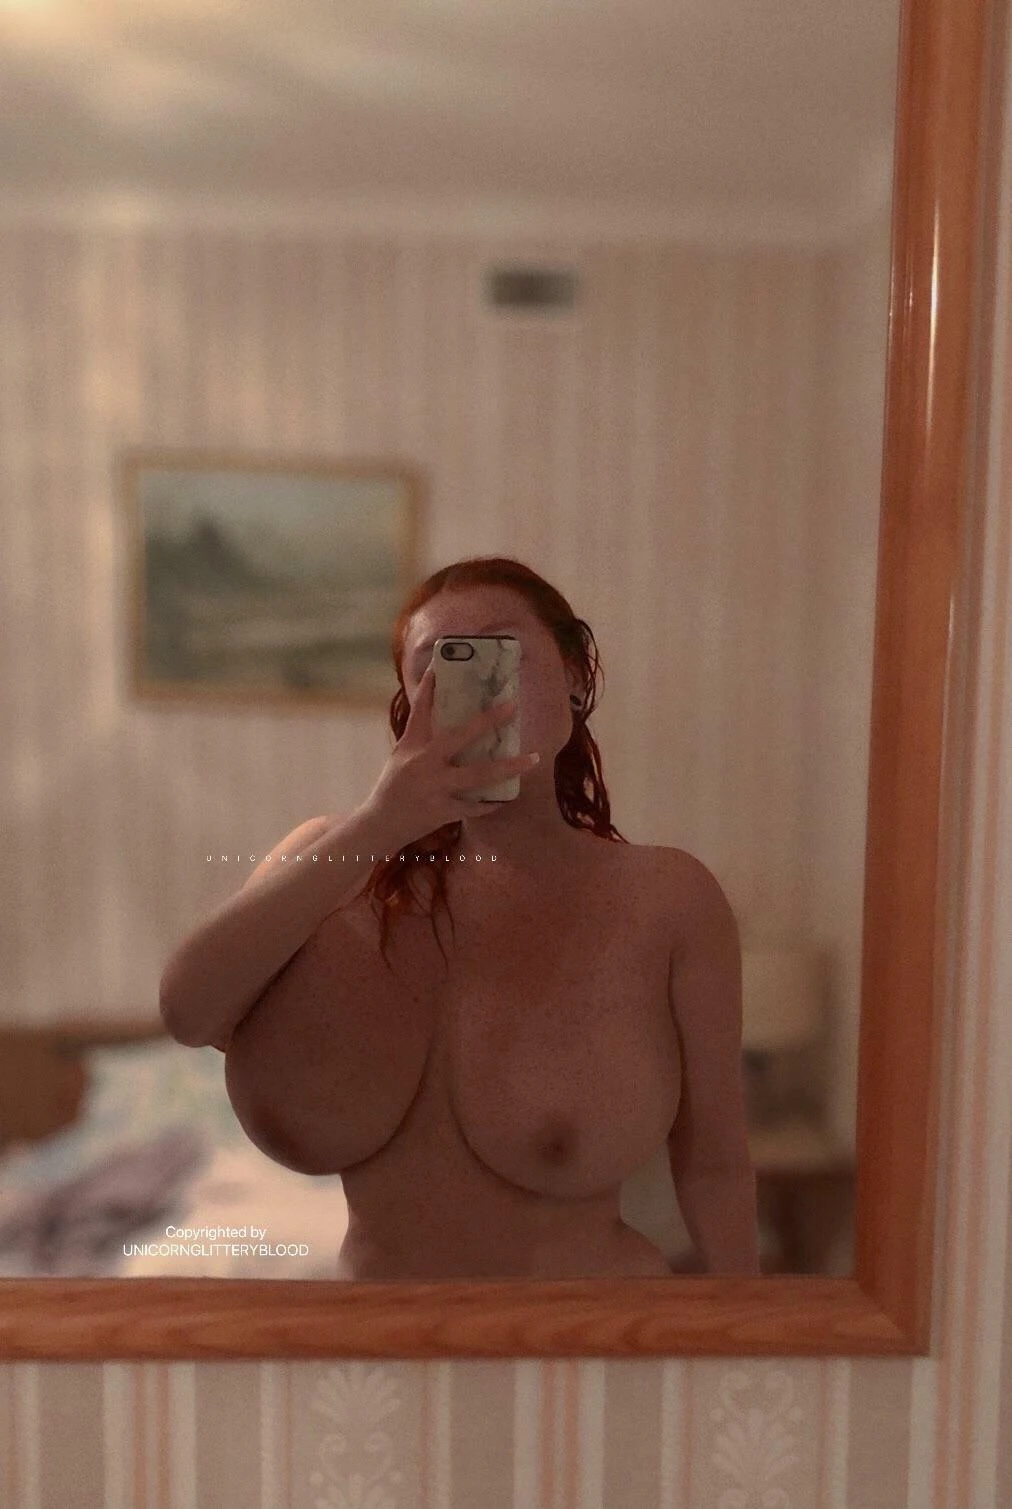 are simple mirror nudes still hot?